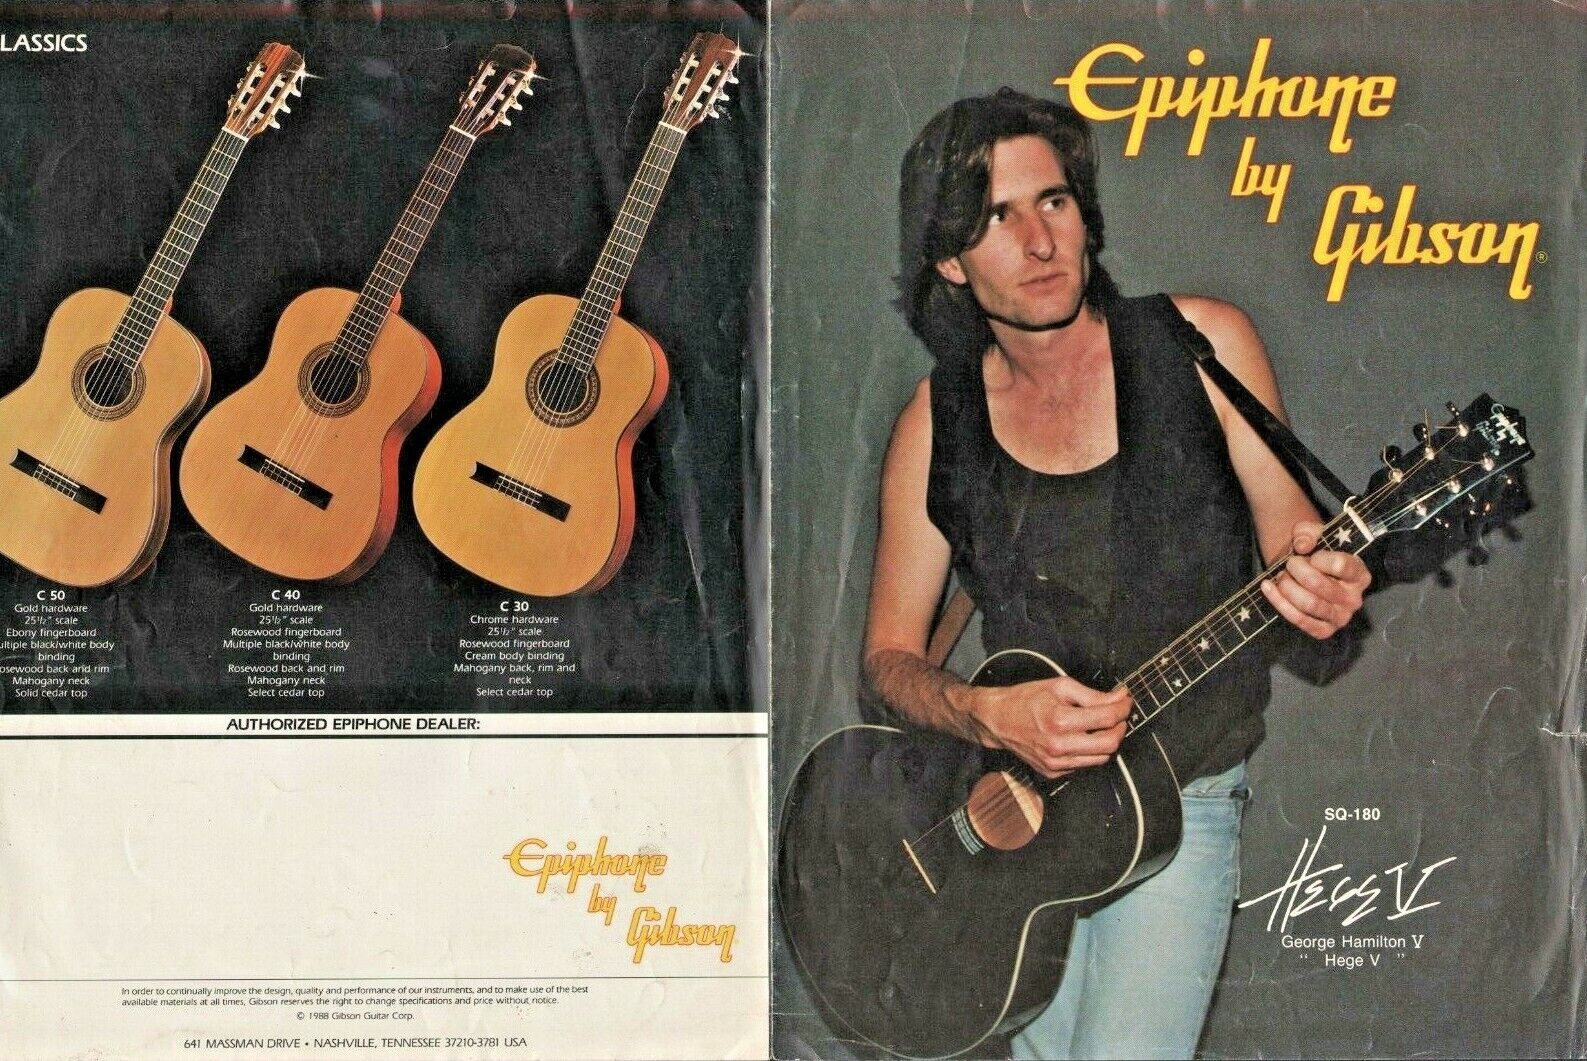 1988 Gibson Epiphone SQ-180 / George Hamilton Hege V - 4-Page Vintage Guitar Ad